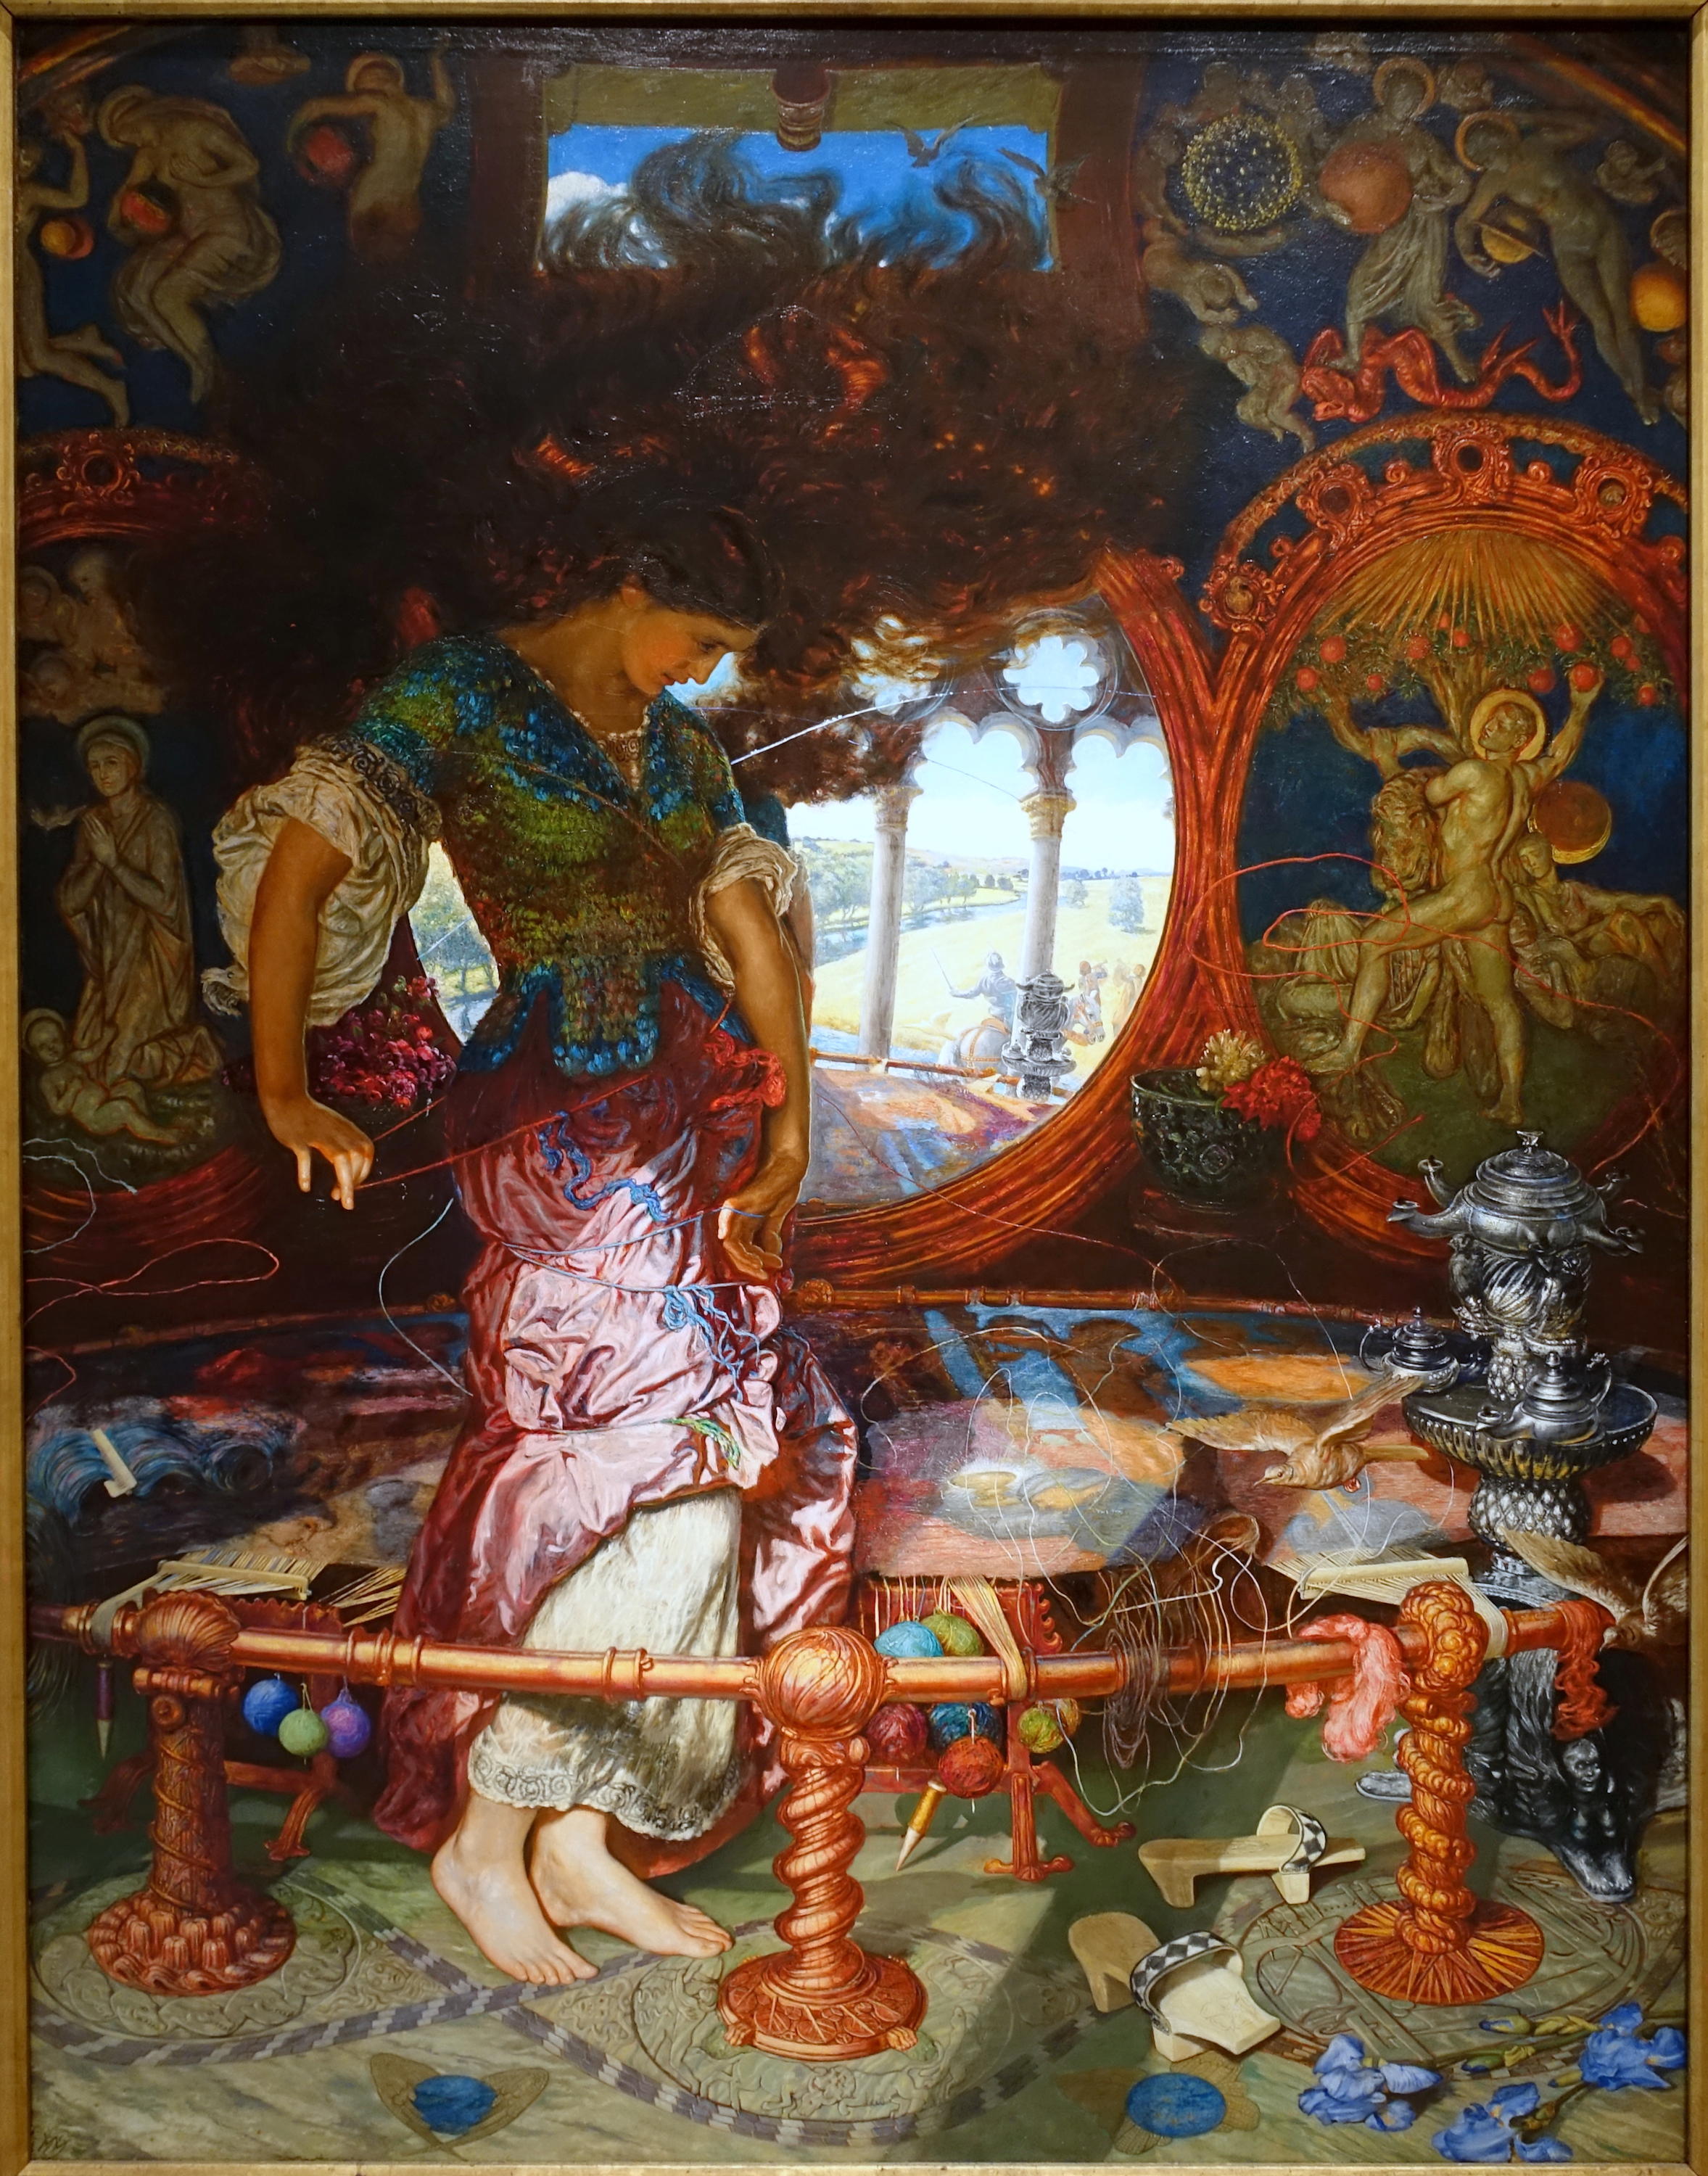 La Dame de Shalott by William Holman Hunt - c. 1890-1905 